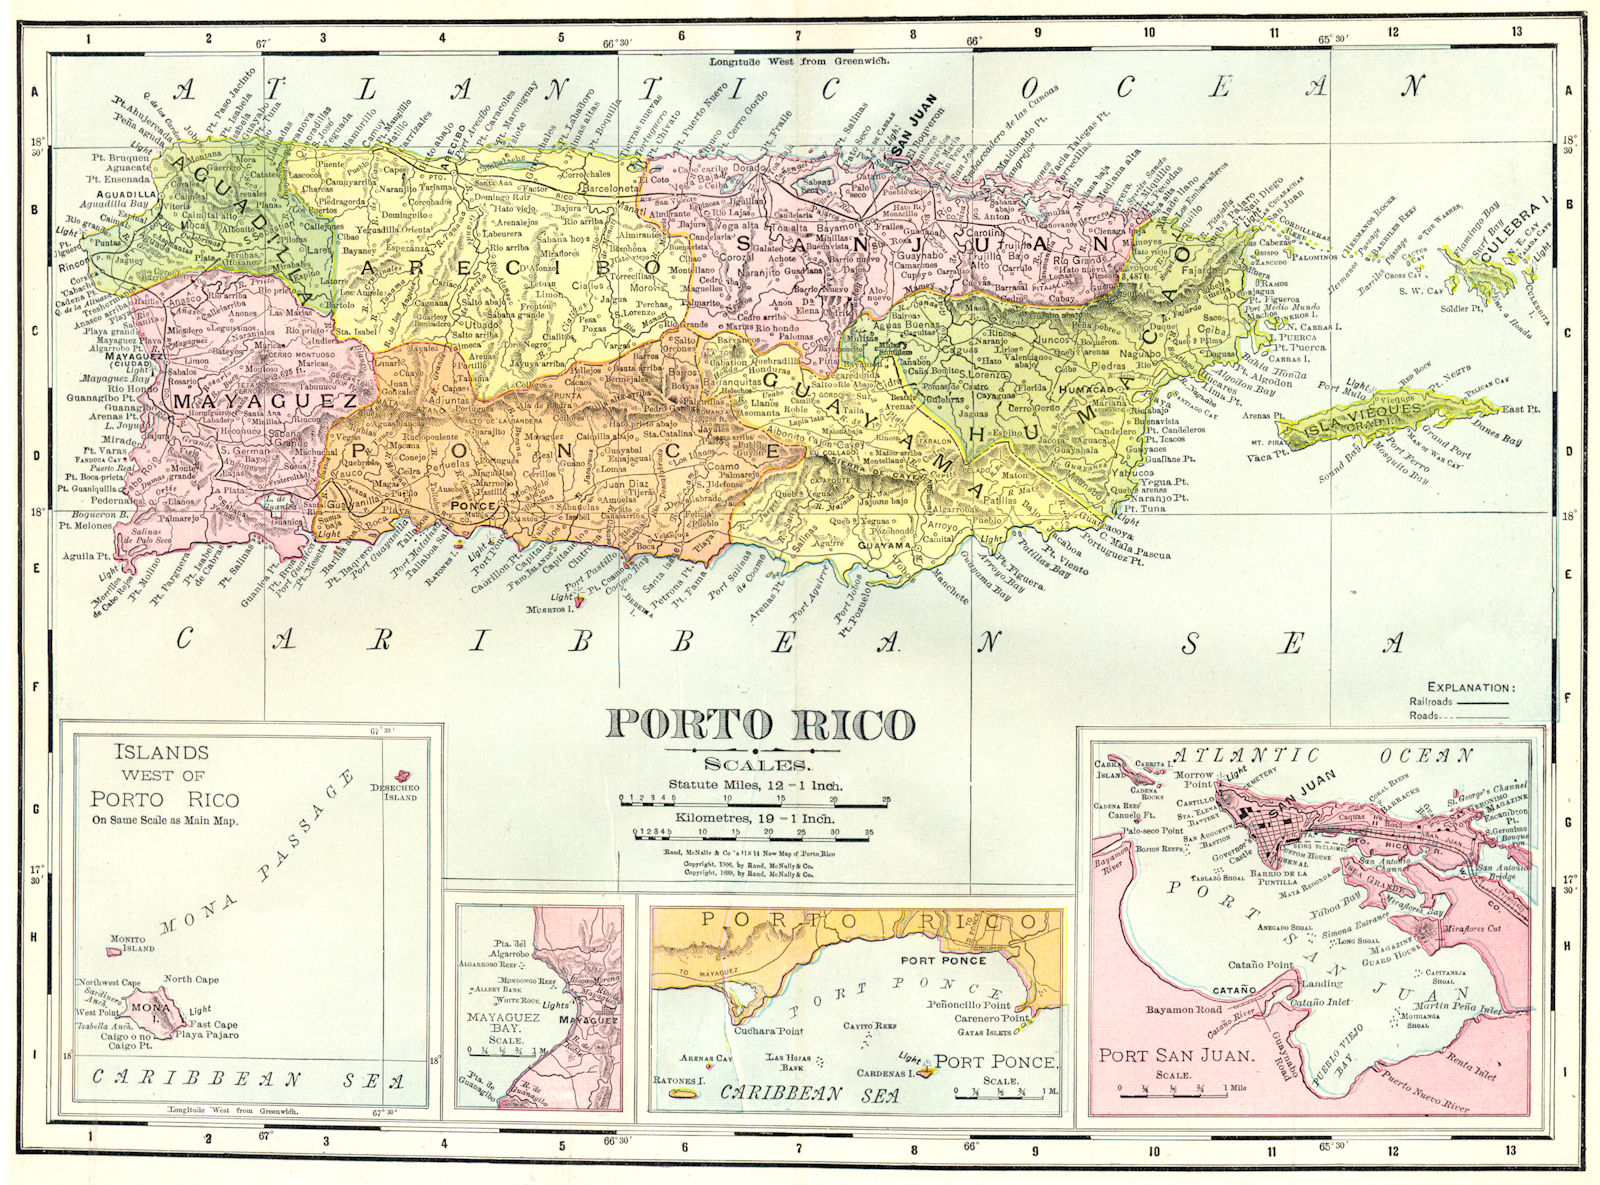 PUERTO RICO, Vieques & Culebra. San Juan plan. 'Porto Rico' 1907 old map